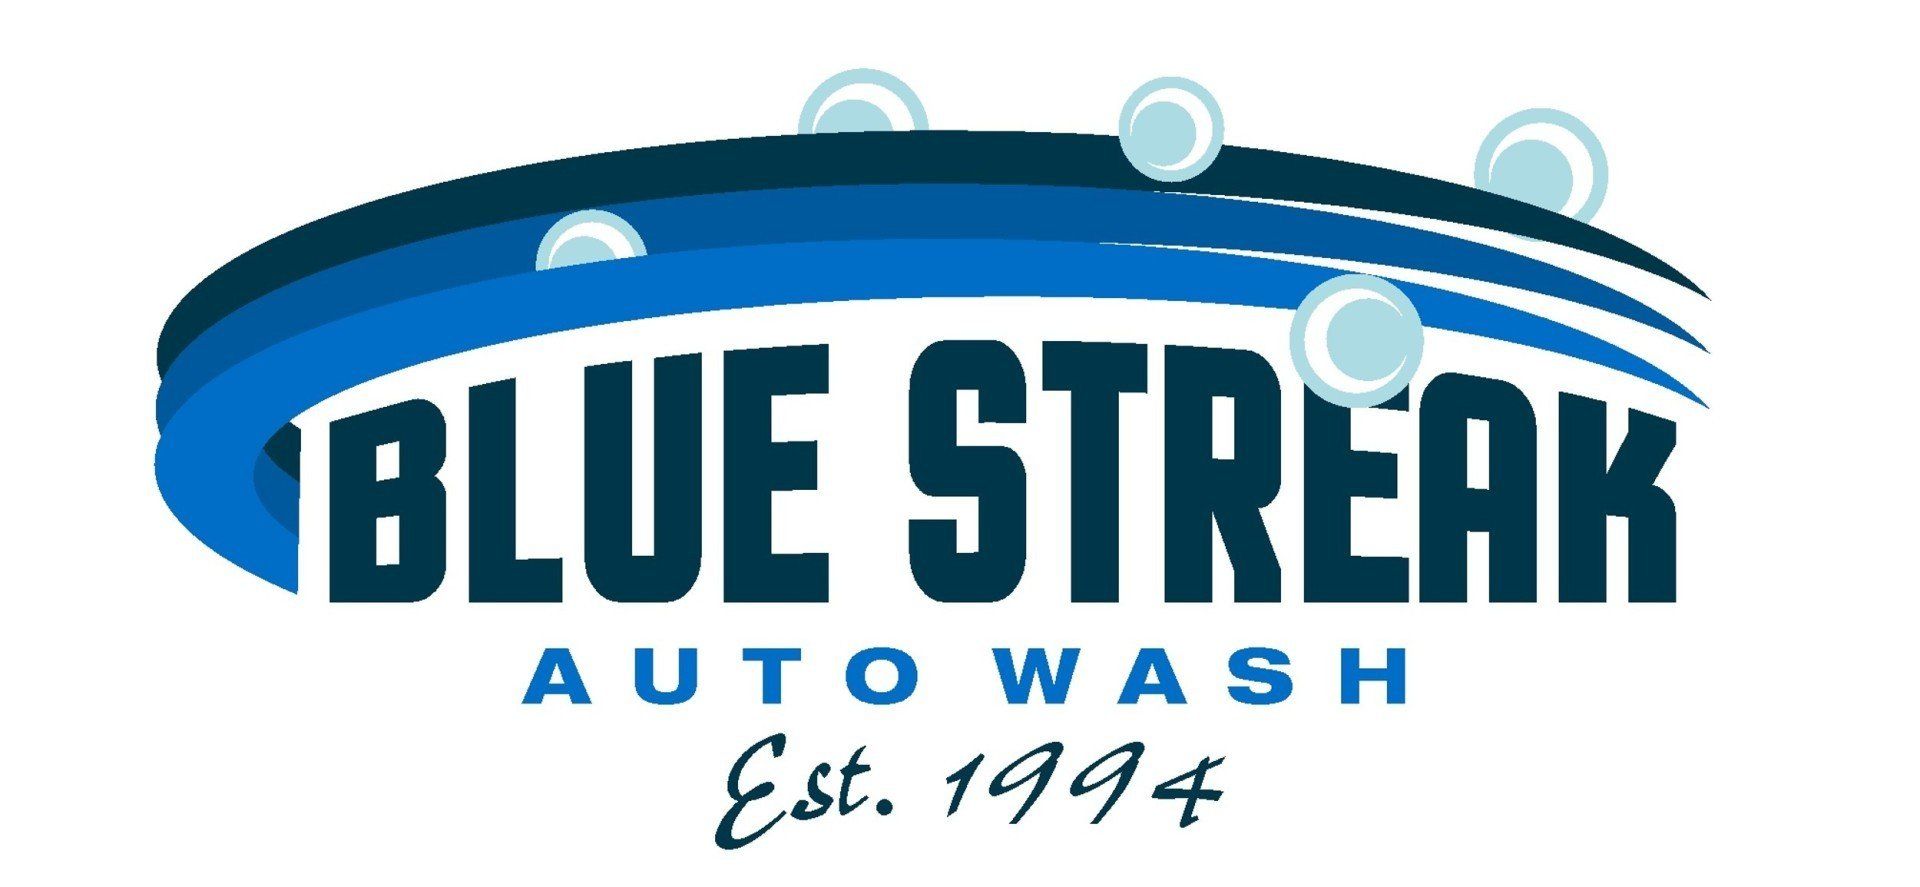 blue streak auto wash